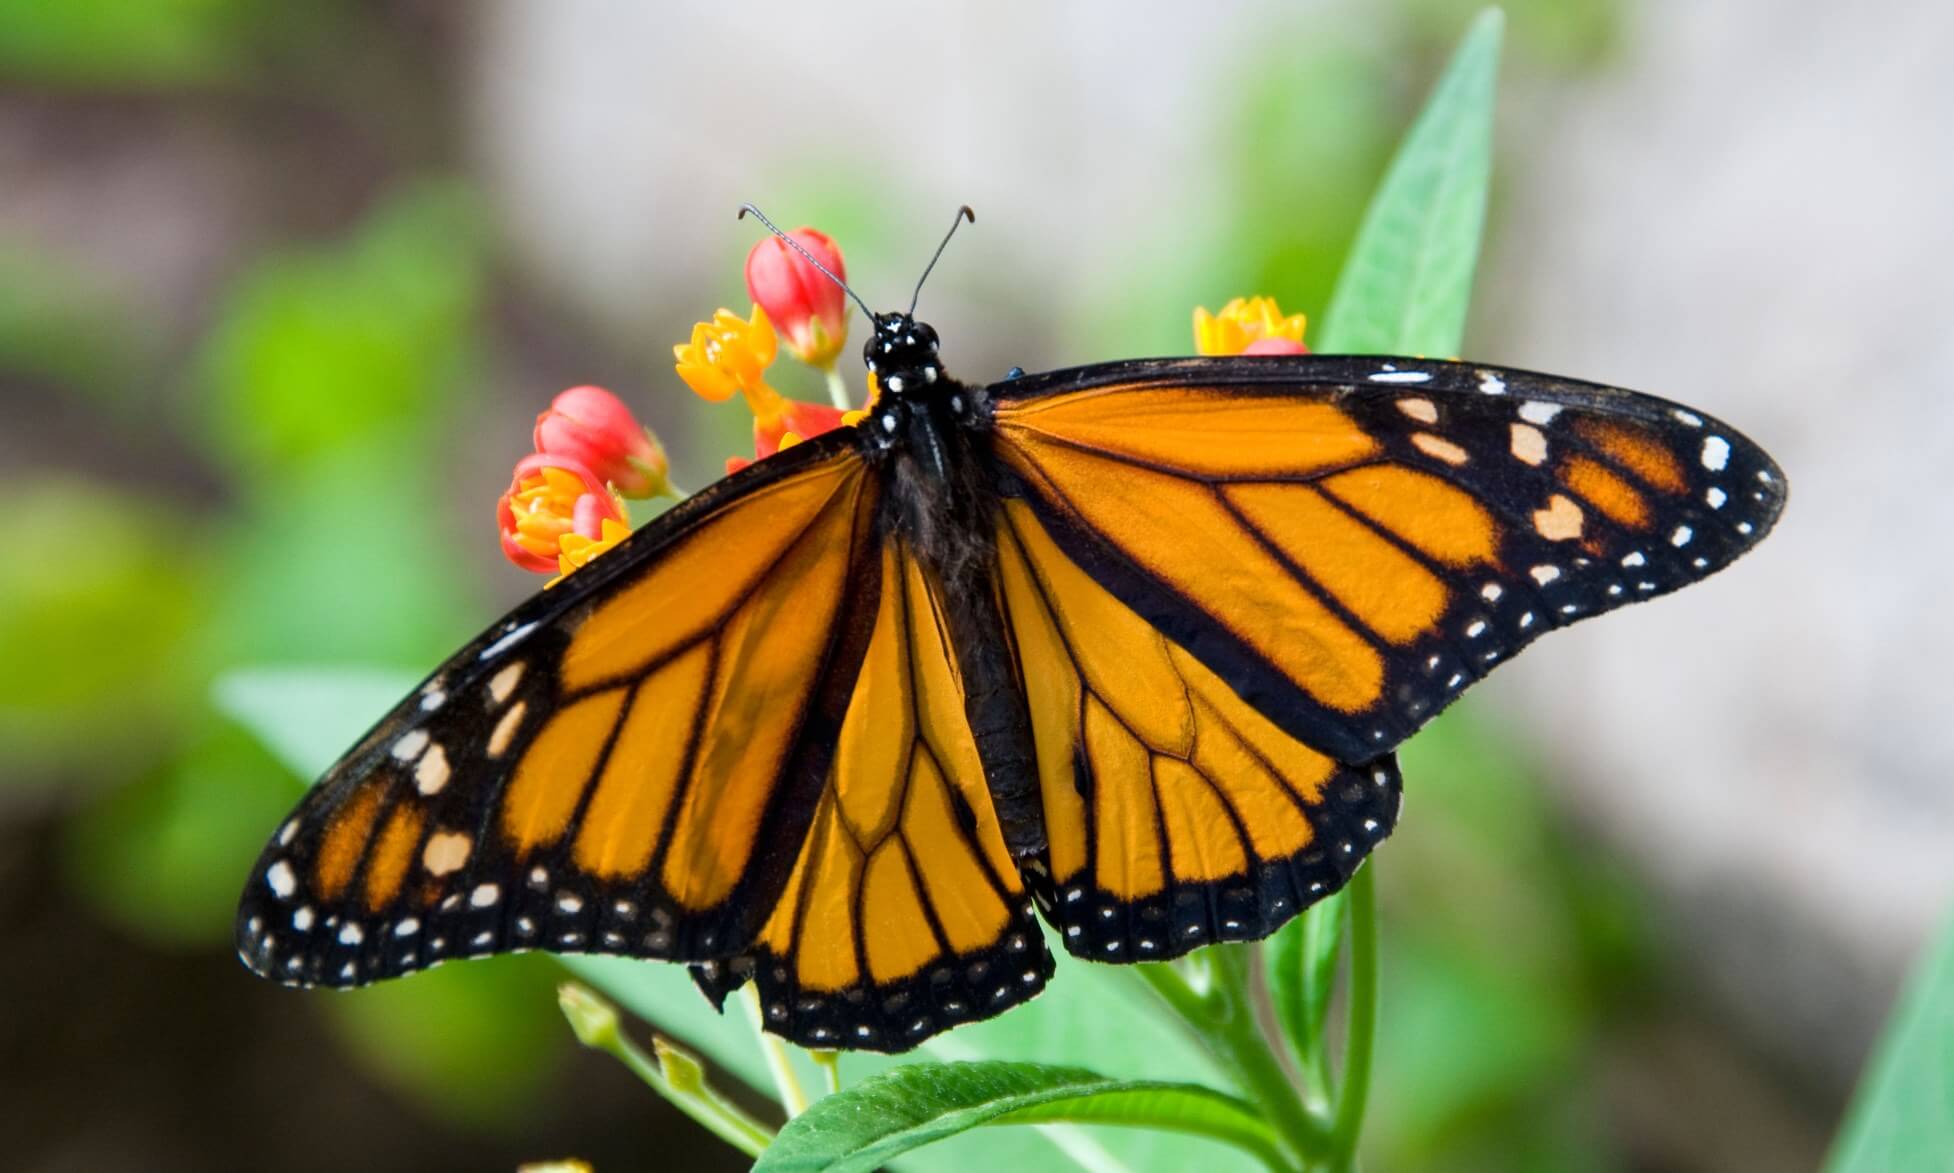 Monarch butterfly with open wings on milkweed flowers